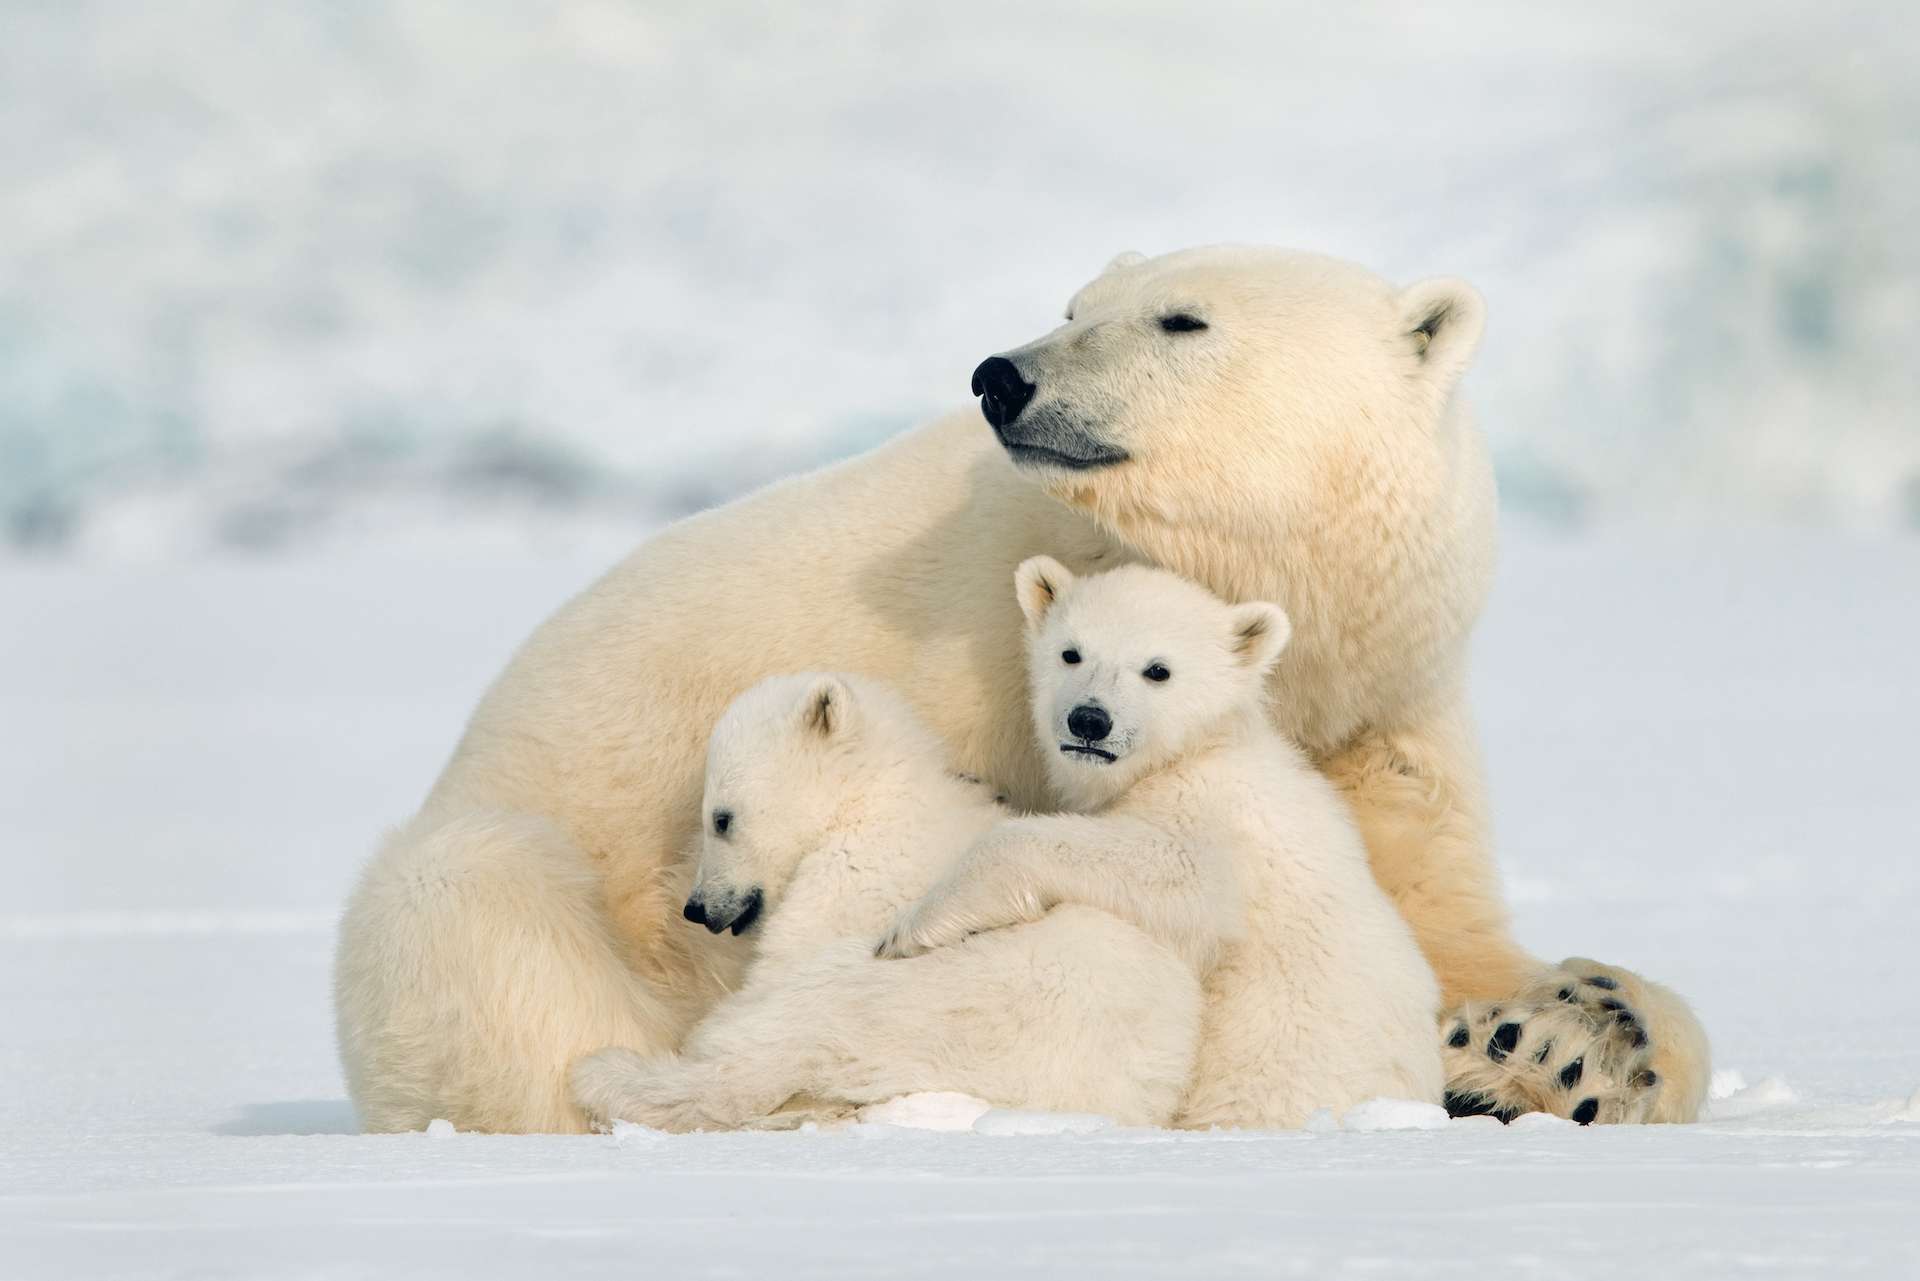 Polar bear and cubs in Canada